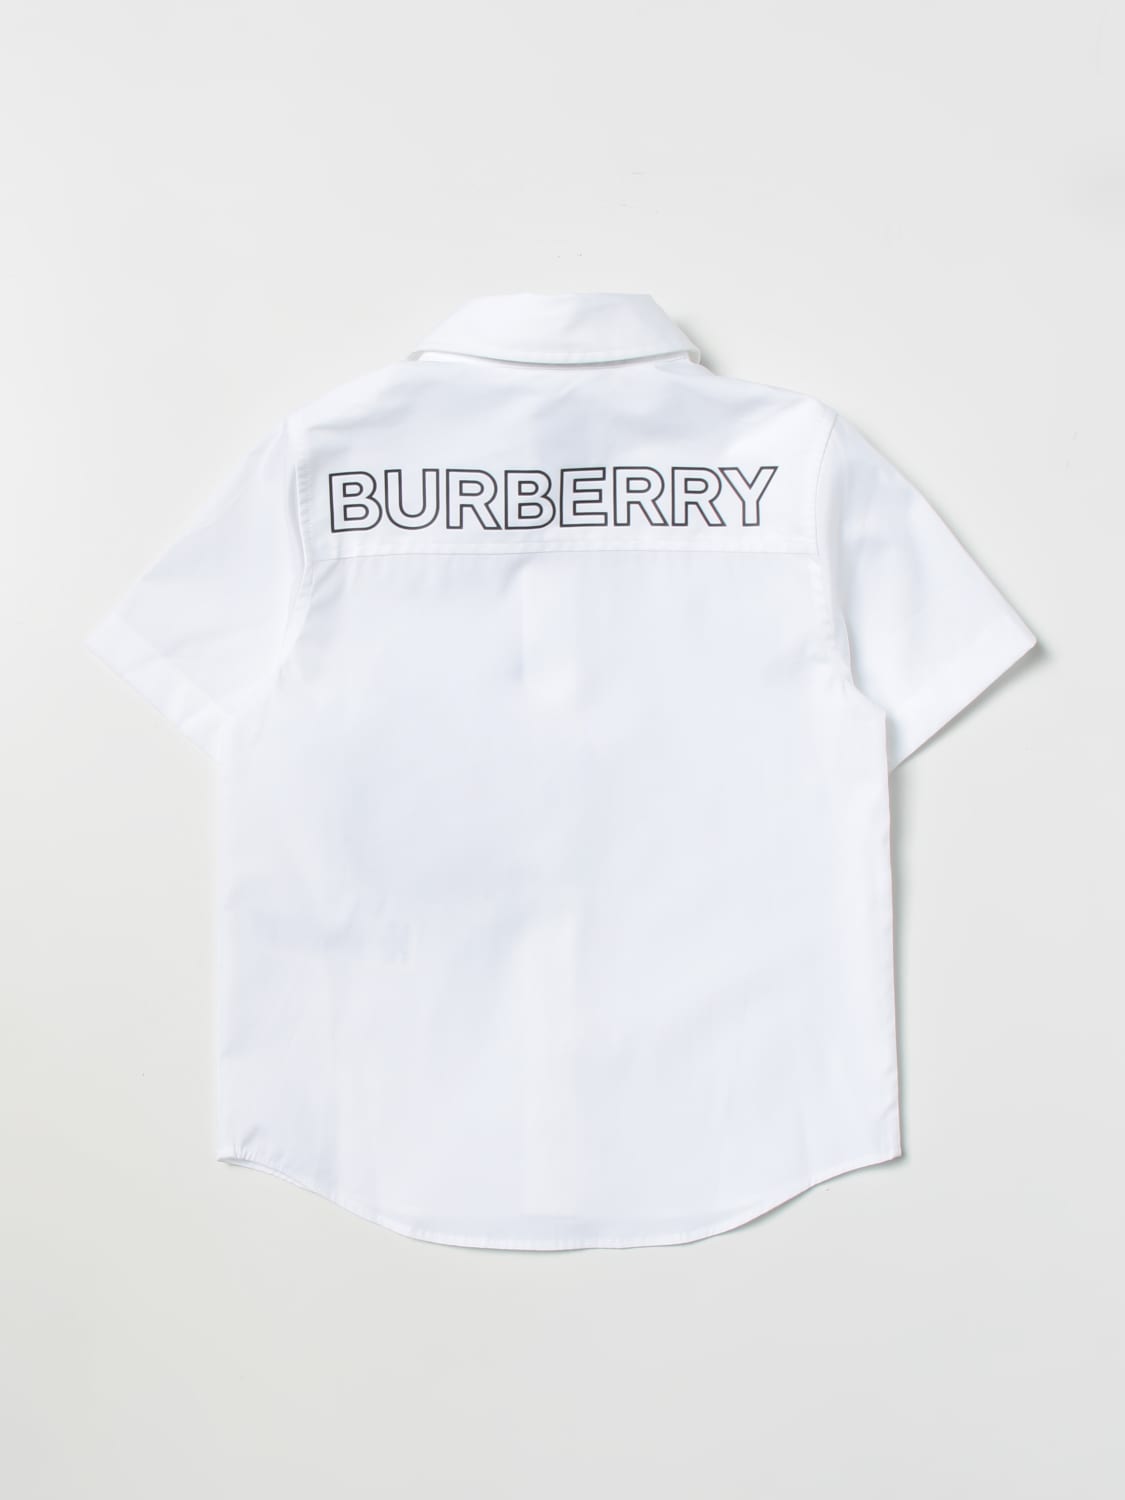 BURBERRY: cotton blend shirt - White  Burberry shirt 8067848 online at